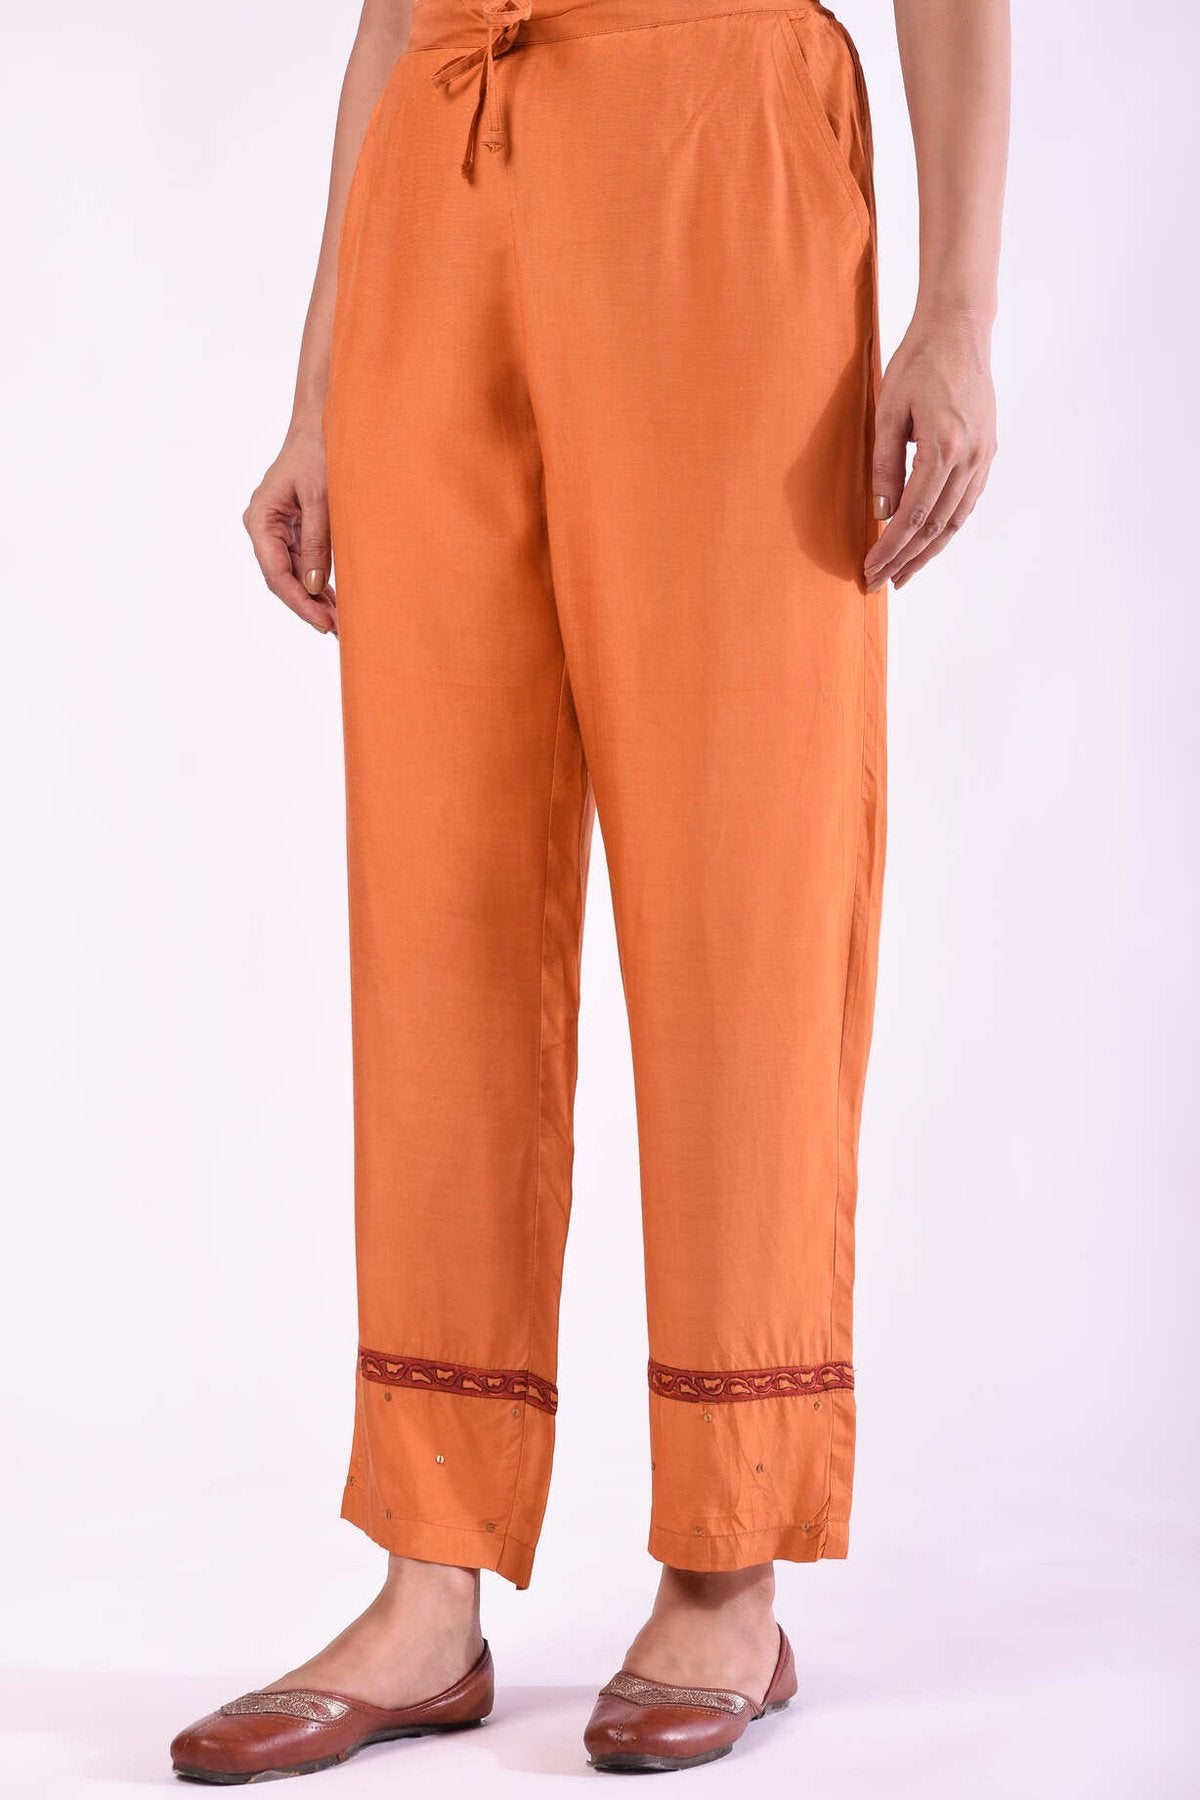 Sarika Pant in Orange